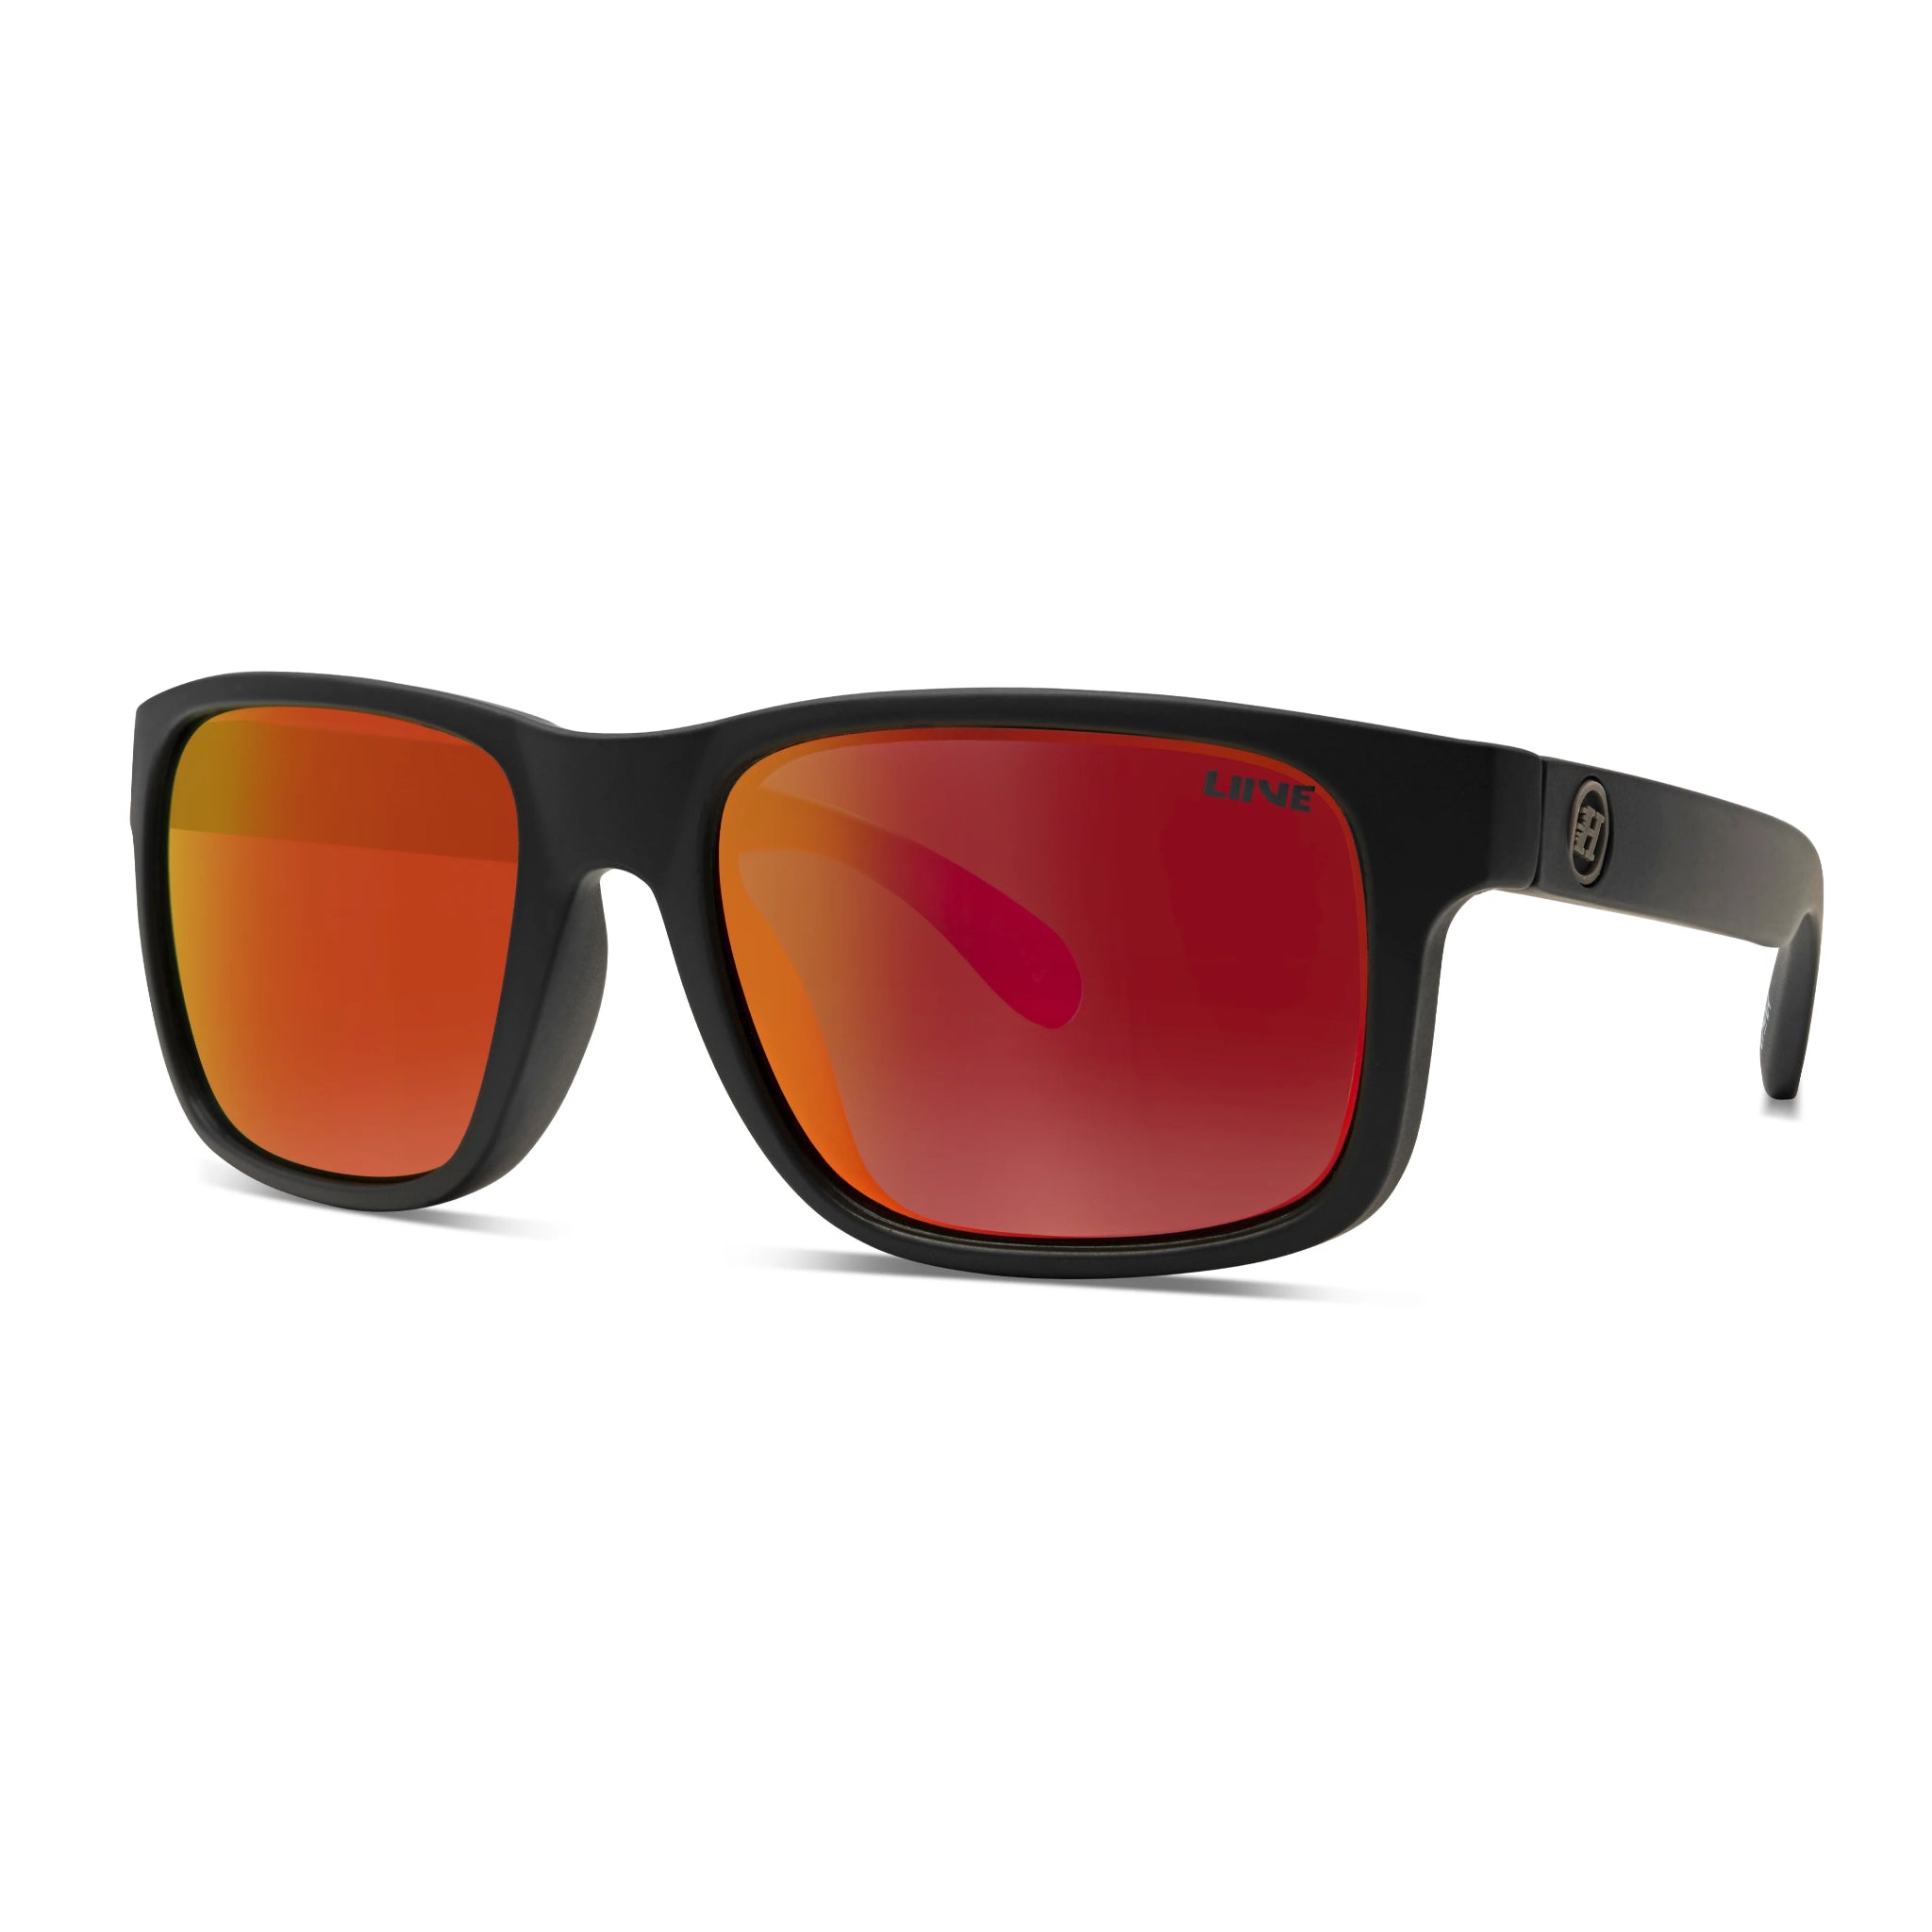 Liive Marlin Sunglasses - Mirror Polar Float Matte Black